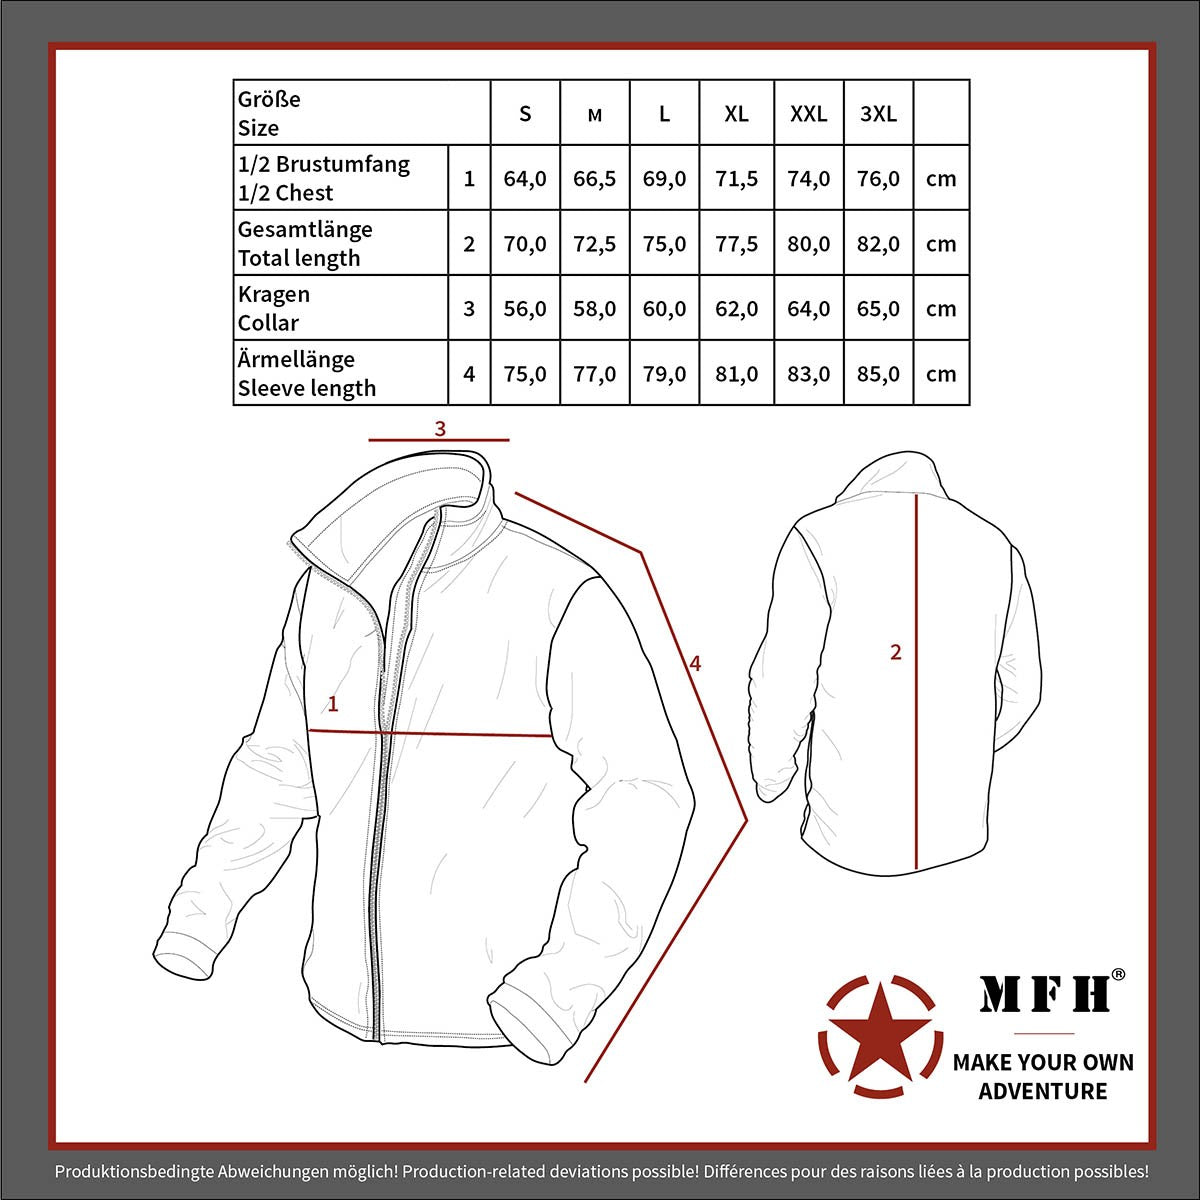 US soft shell jacket, coyote tan, GEN III, level 5